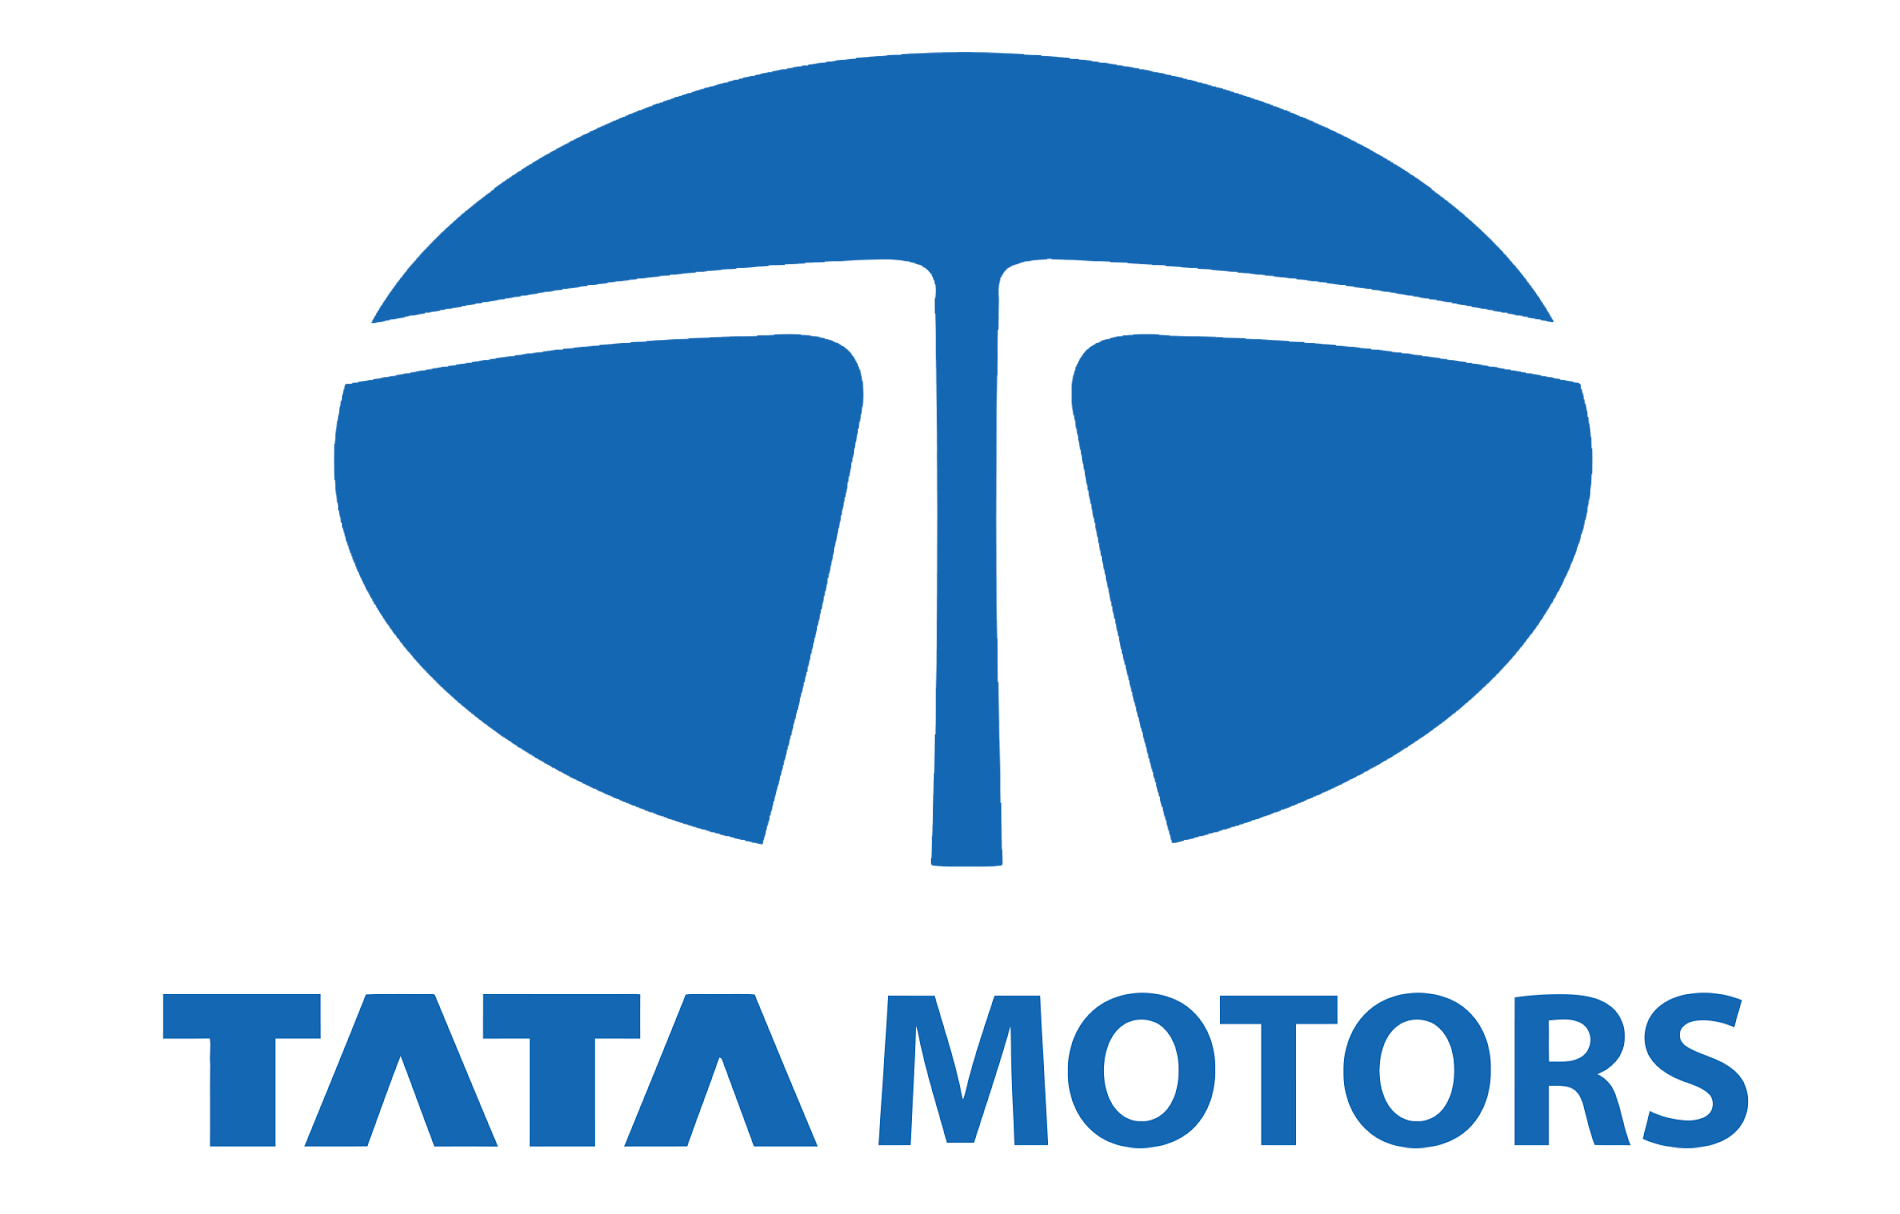 Tata Motors Cars Showroom - Tejaswi Automobiles|Show Room|Automotive